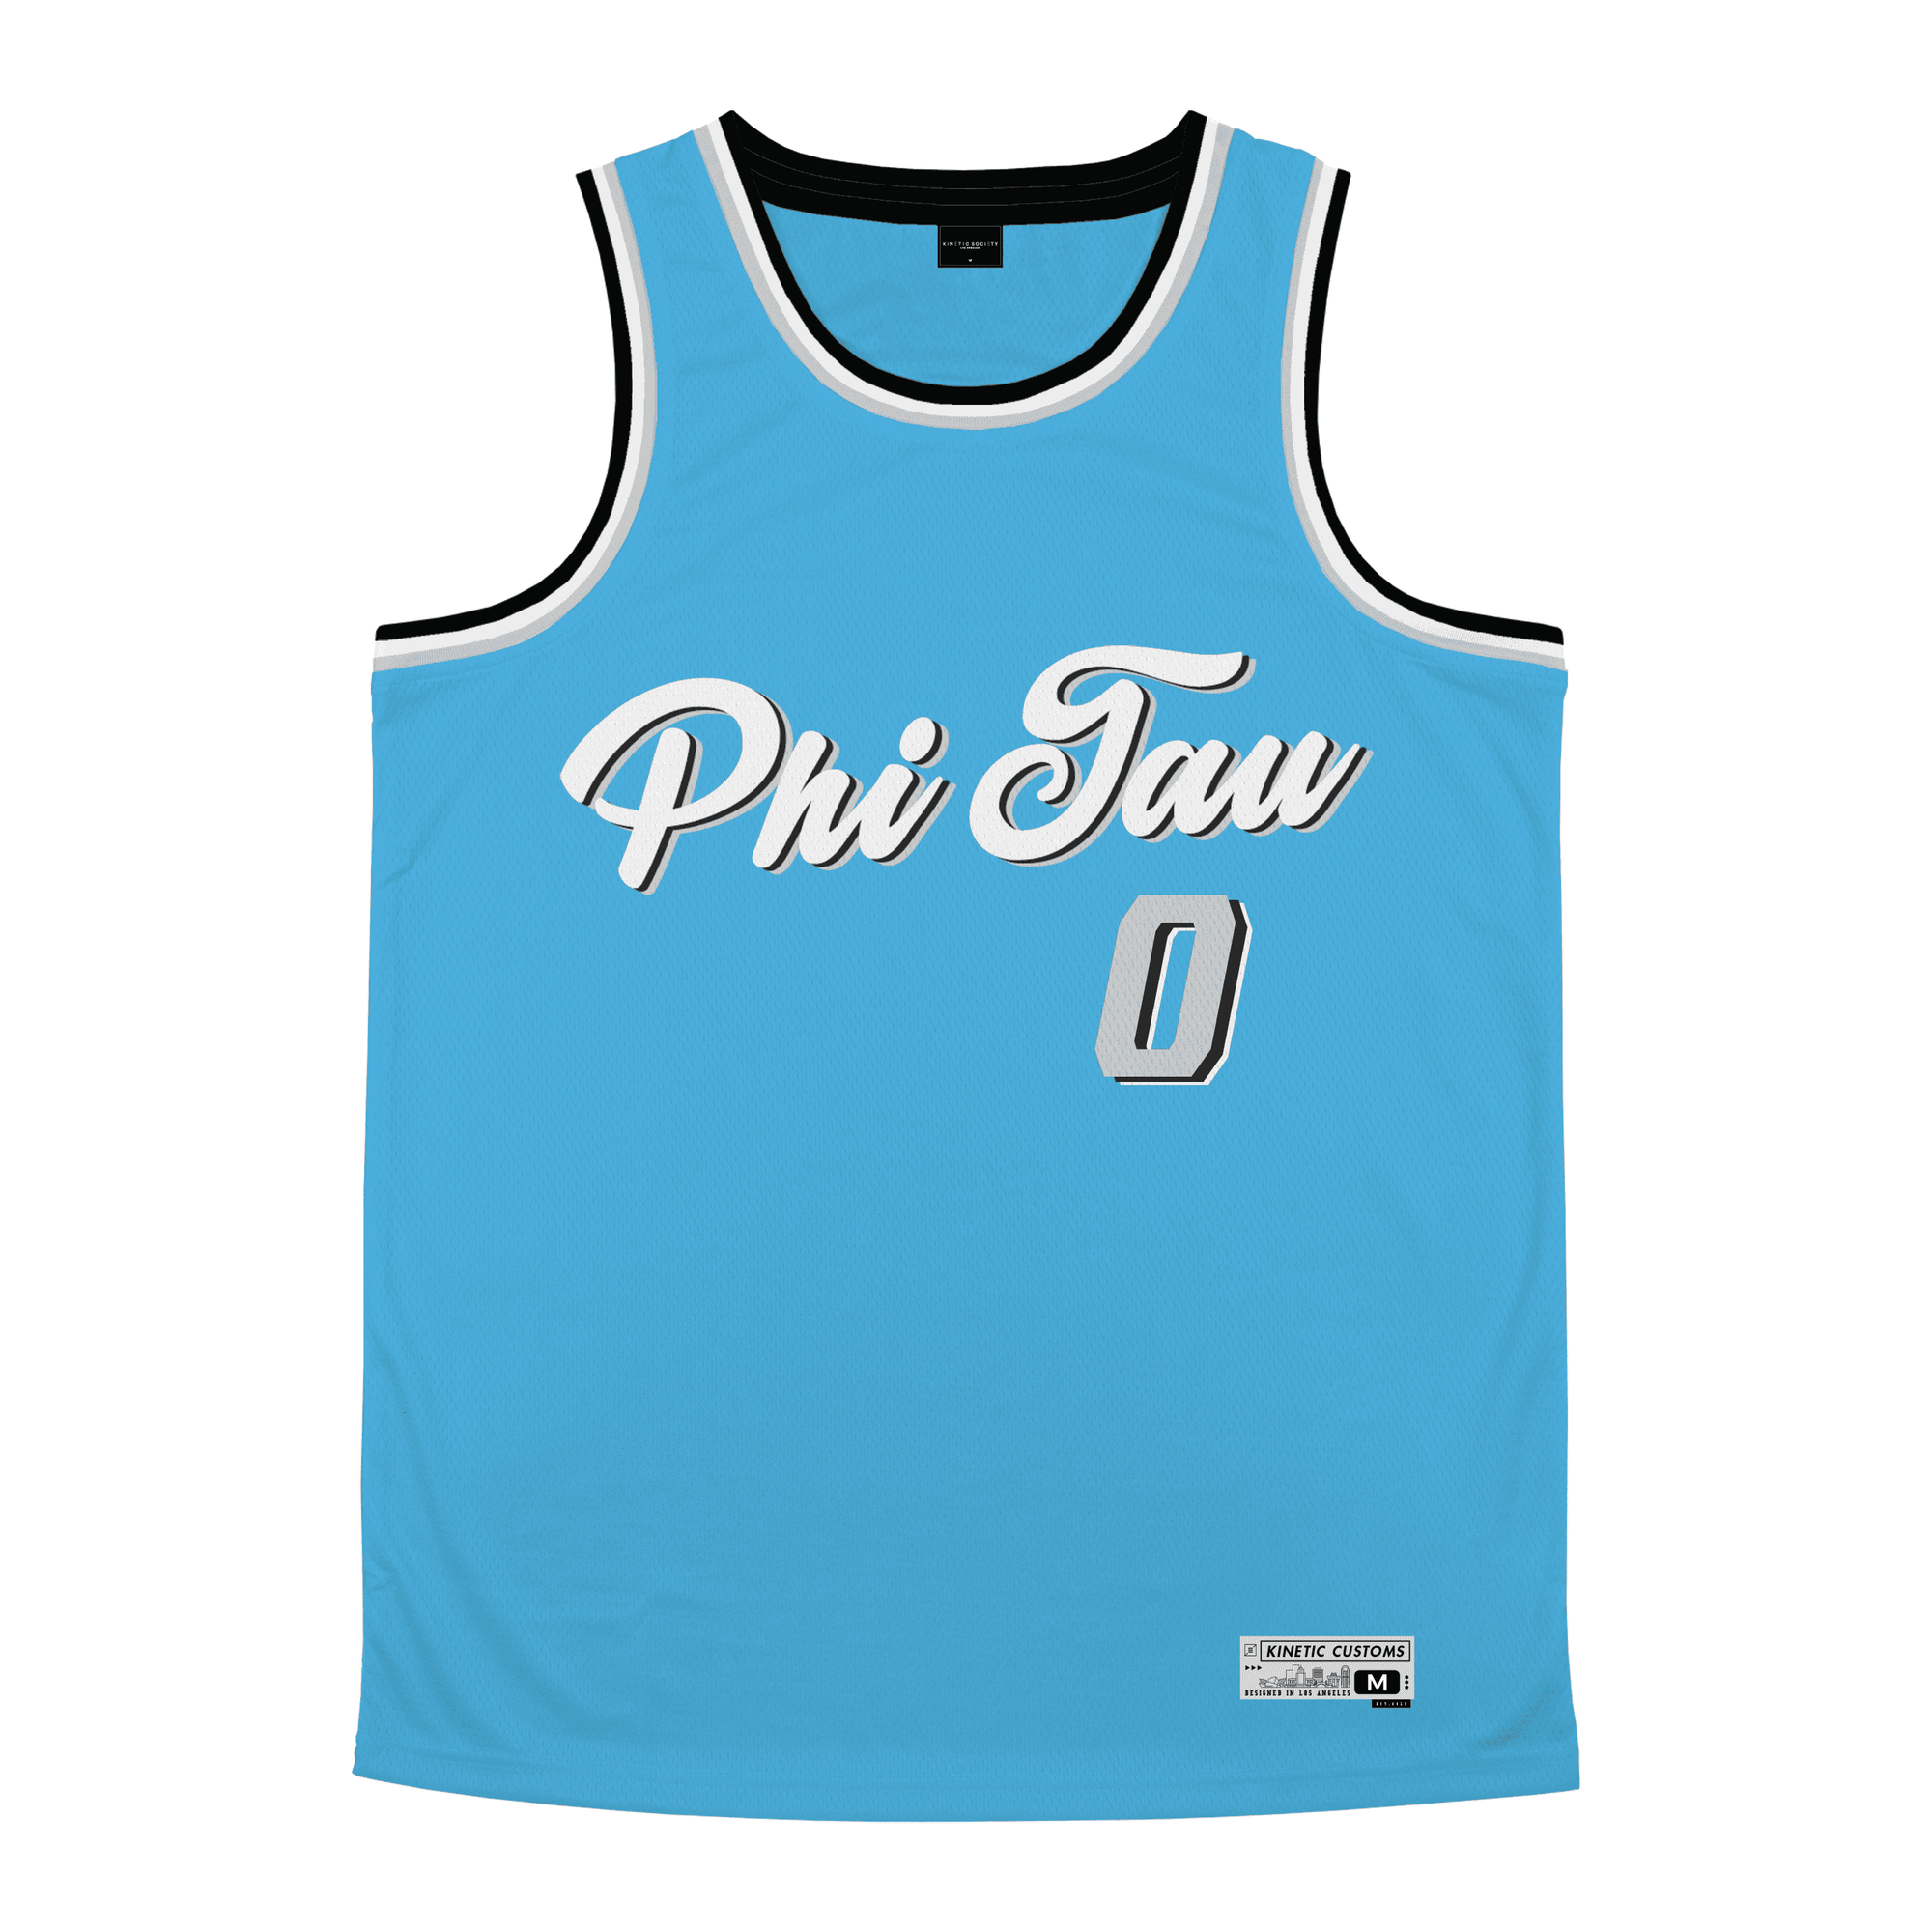 Phi Kappa Tau - Pacific Mist Basketball Jersey